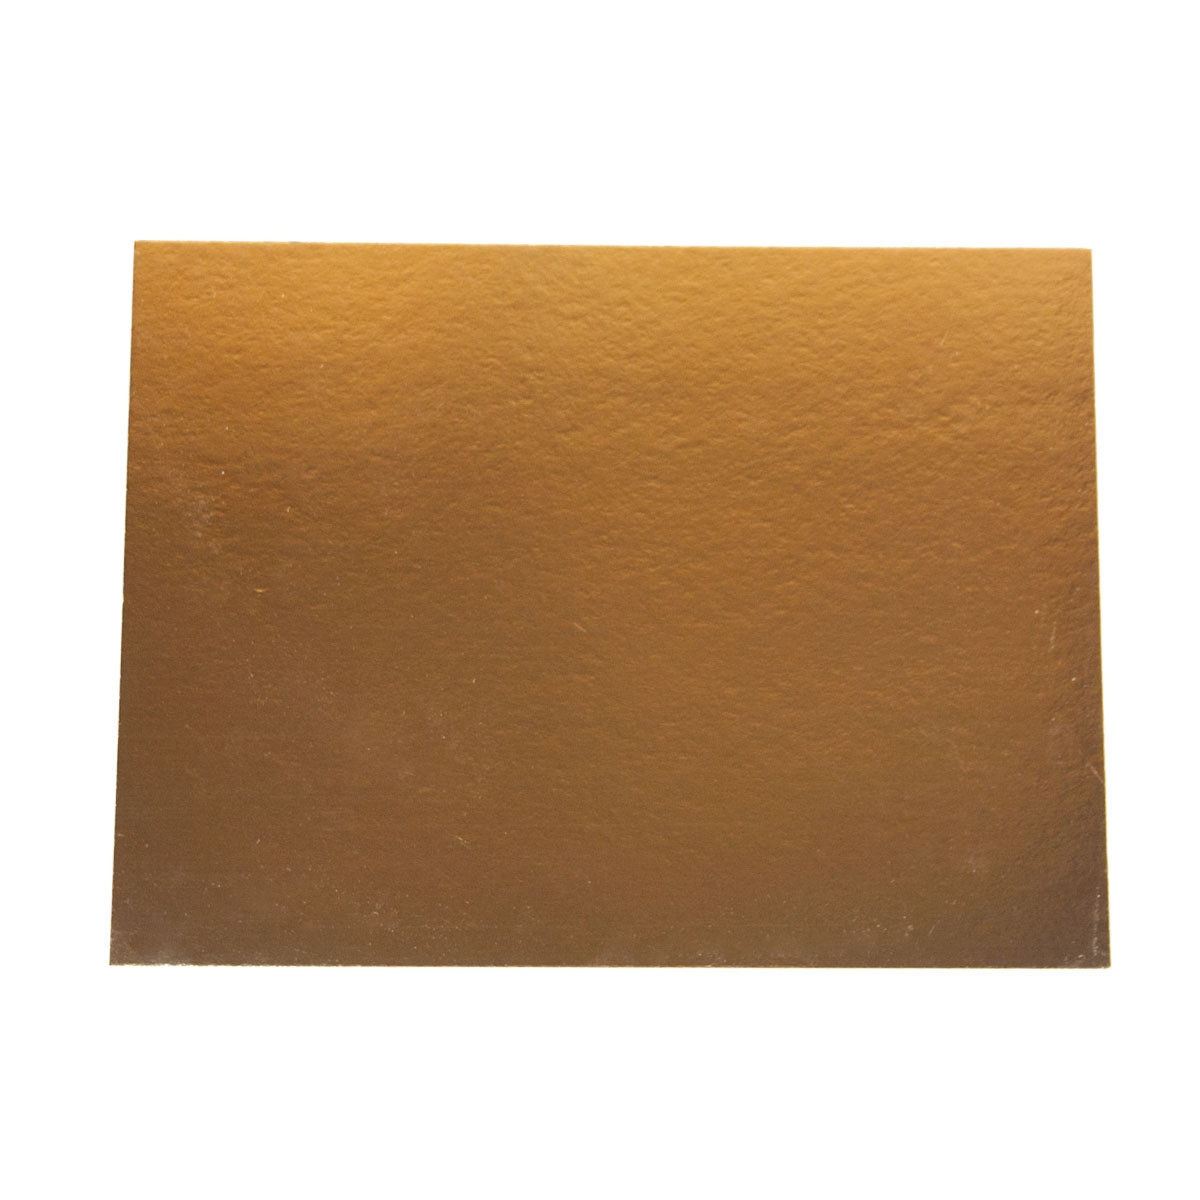 Cake Cardboard Rectangle Gold/Black 60x40cm per piece